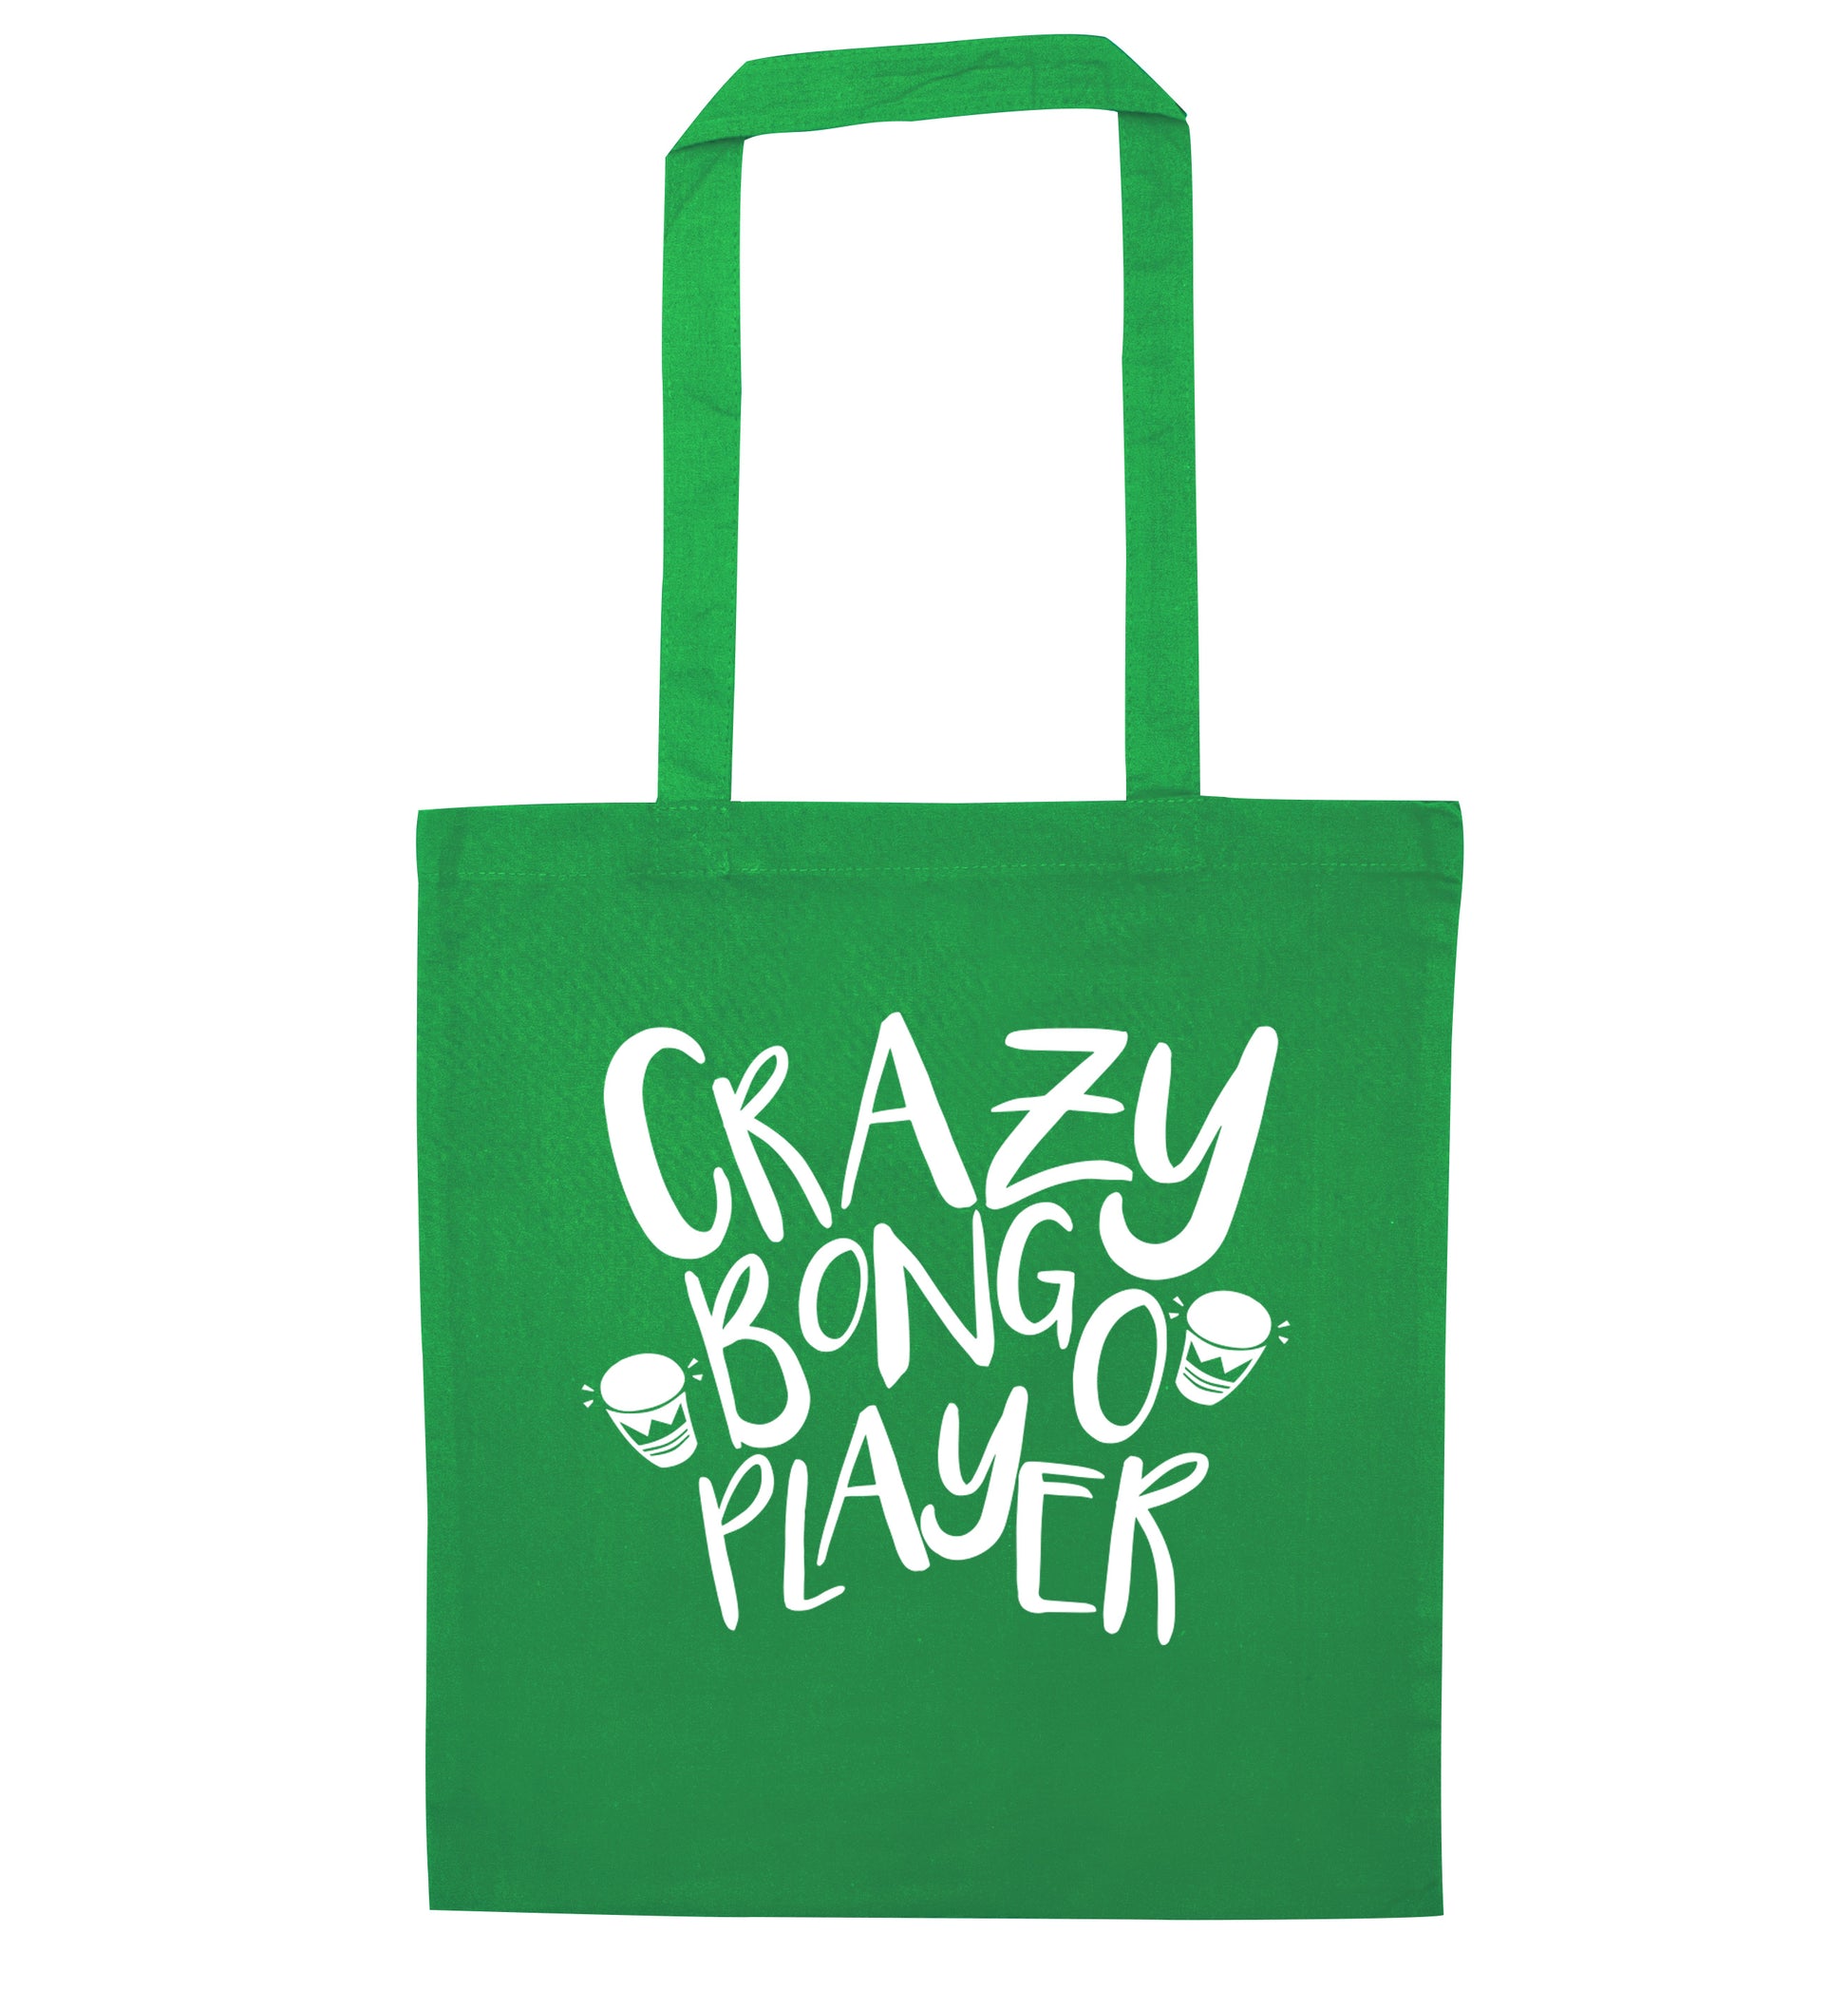 Crazy bongo player green tote bag